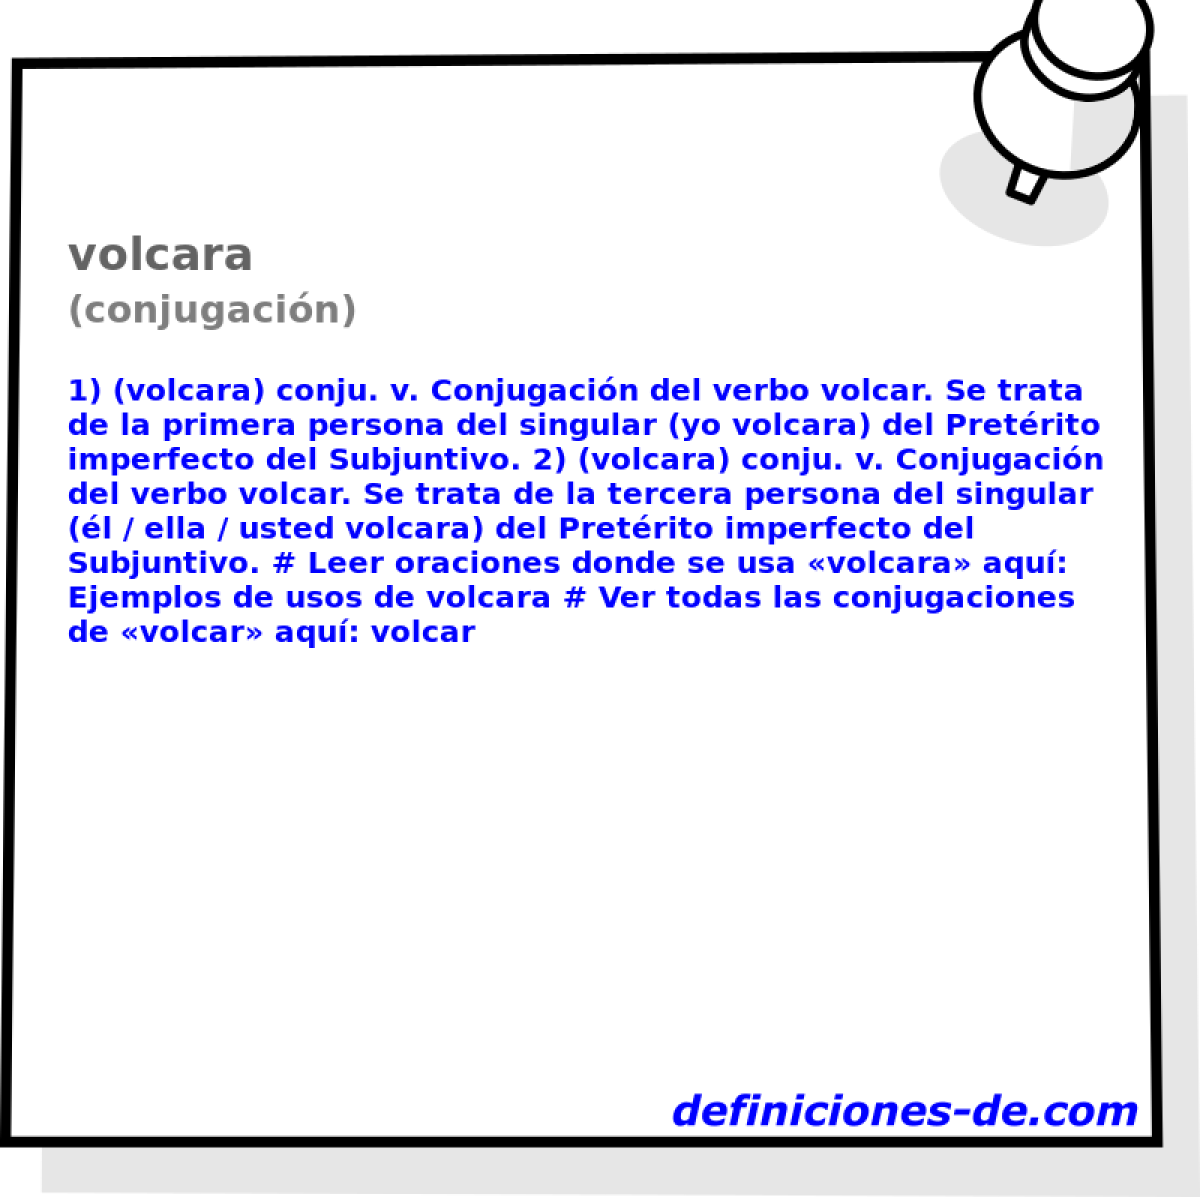 volcara (conjugacin)